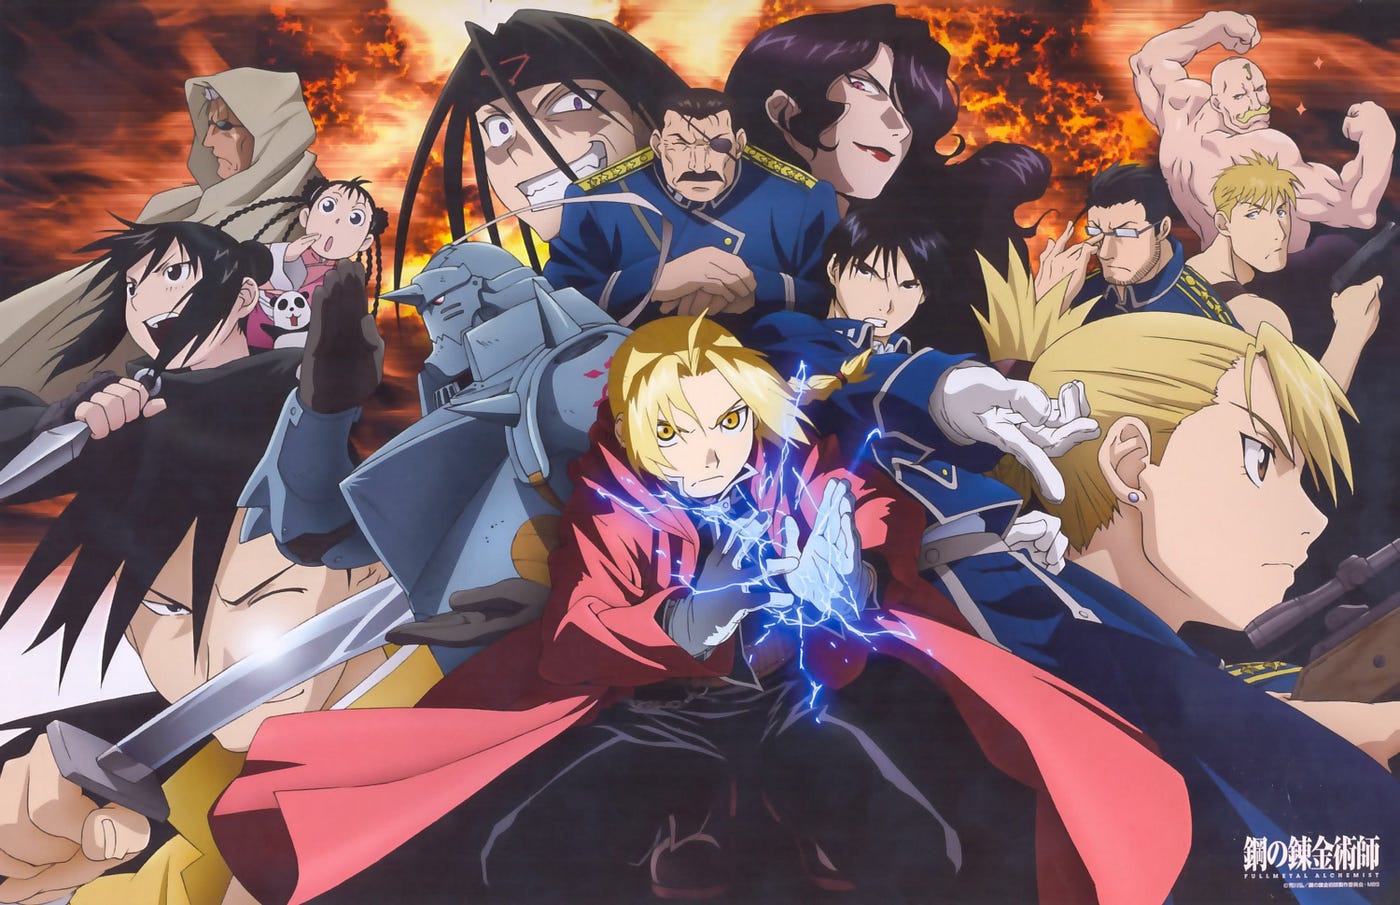 Anime Review: Fullmetal Alchemist Brotherhood (Part 1)